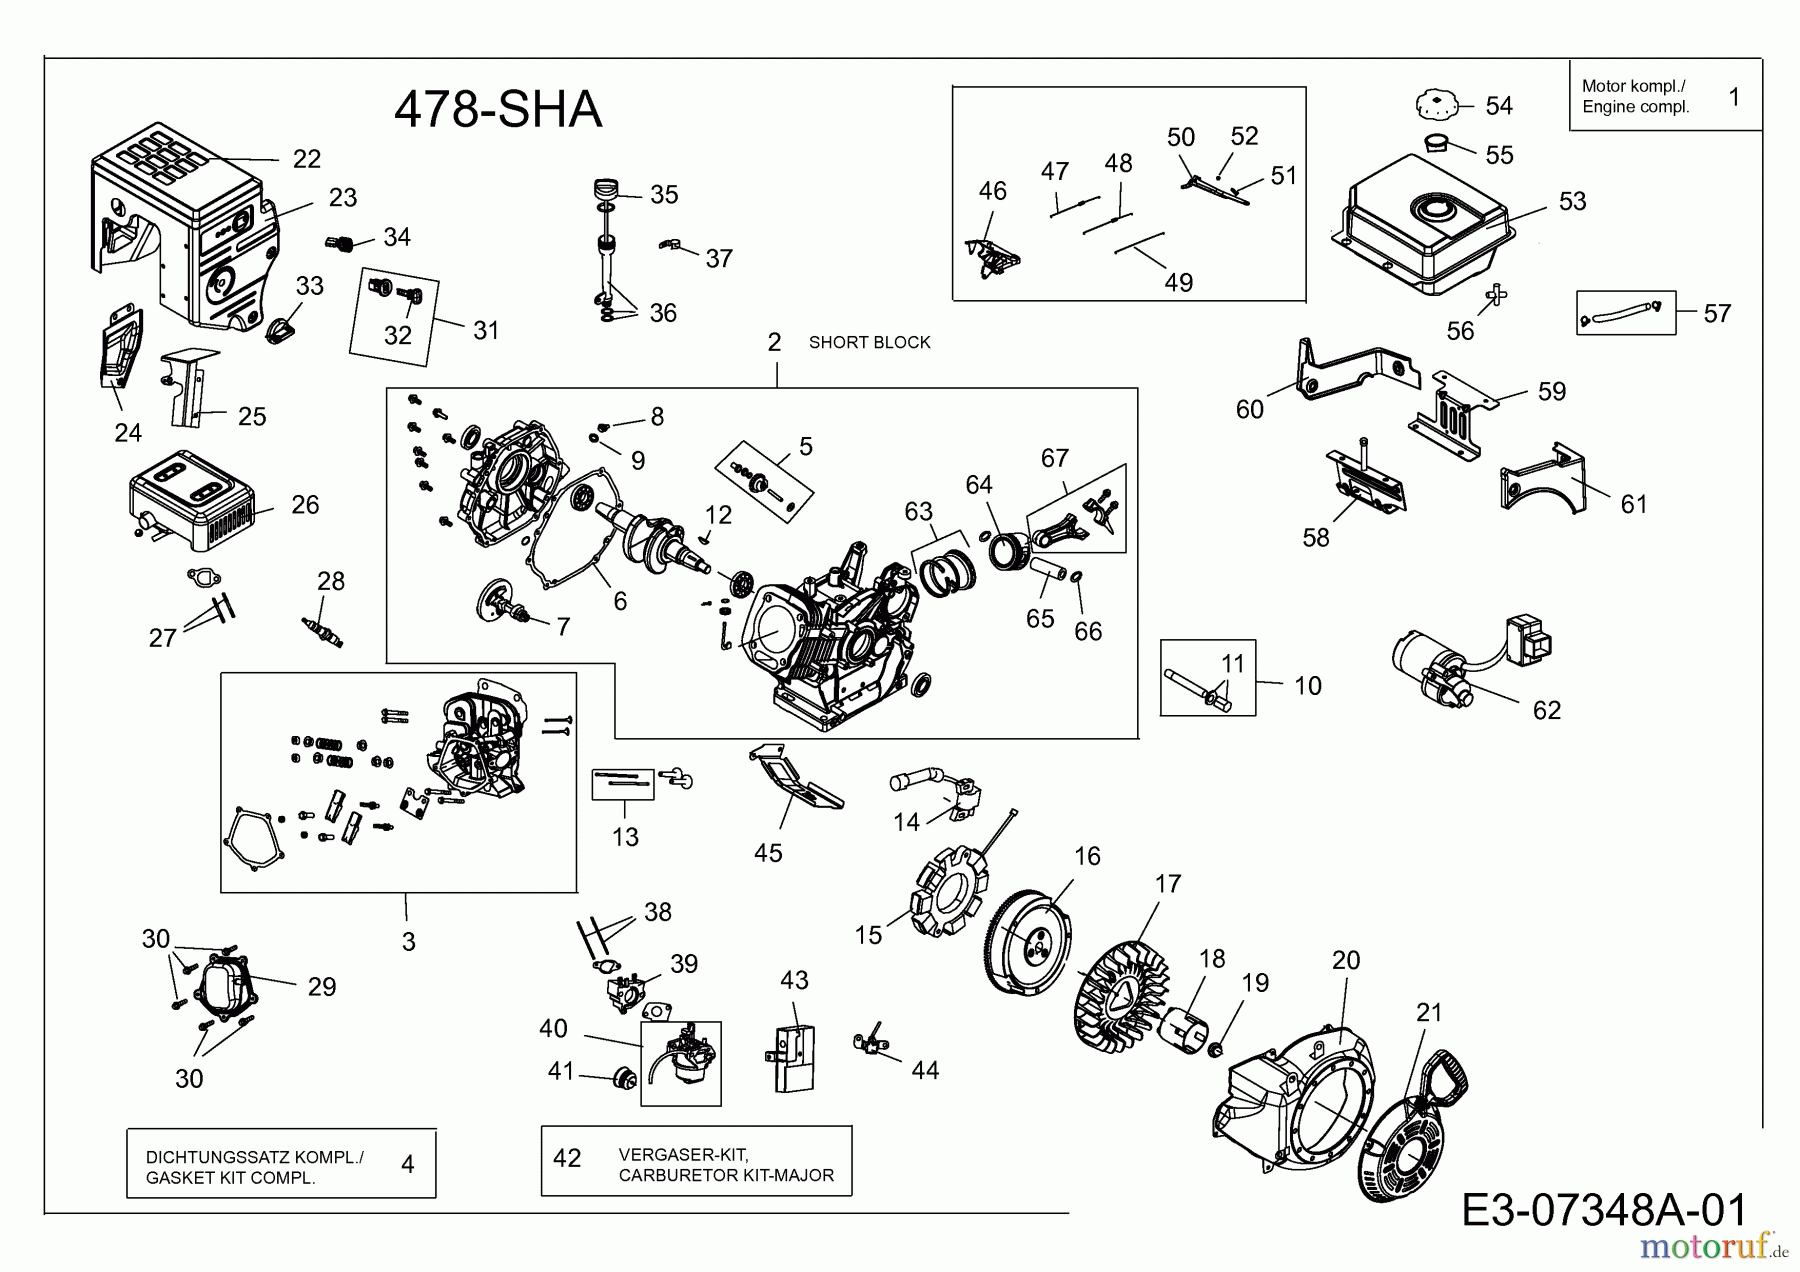  MTD-Engines MTD horizontal 478-SHA 752Z478-SHA  (2012) Engine